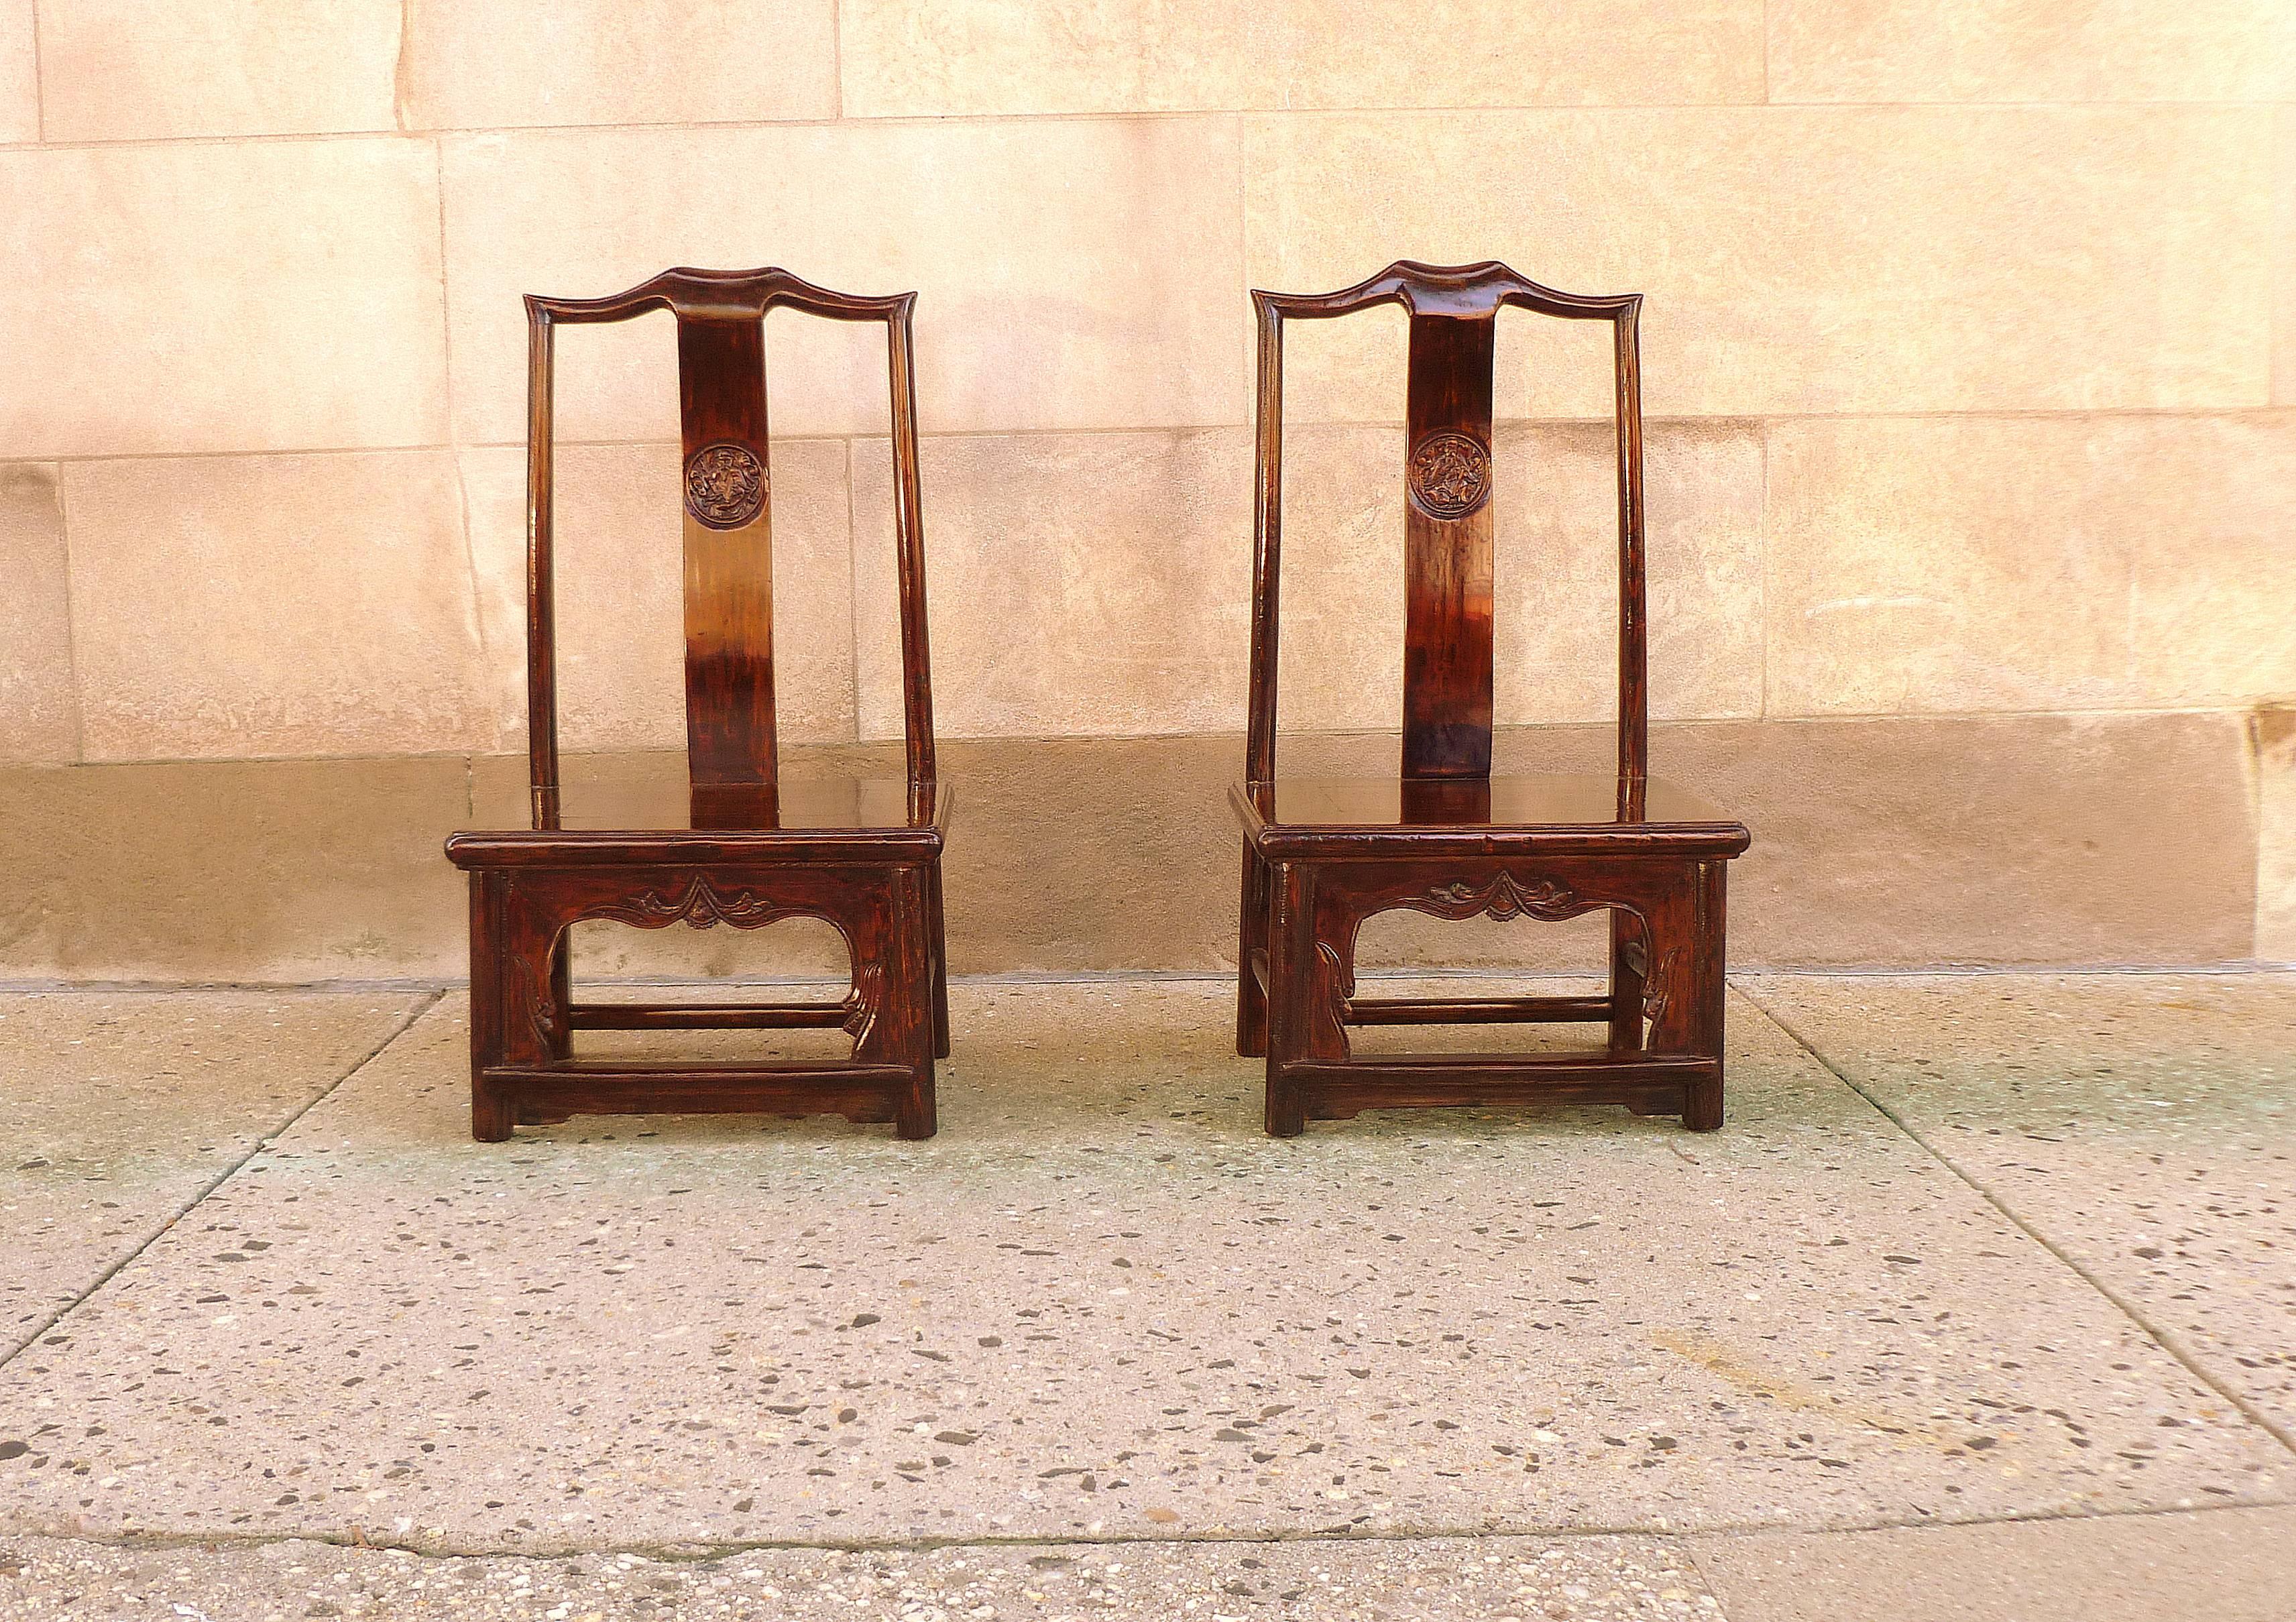 Pair of Jumu children chairs, simple and elegant form.